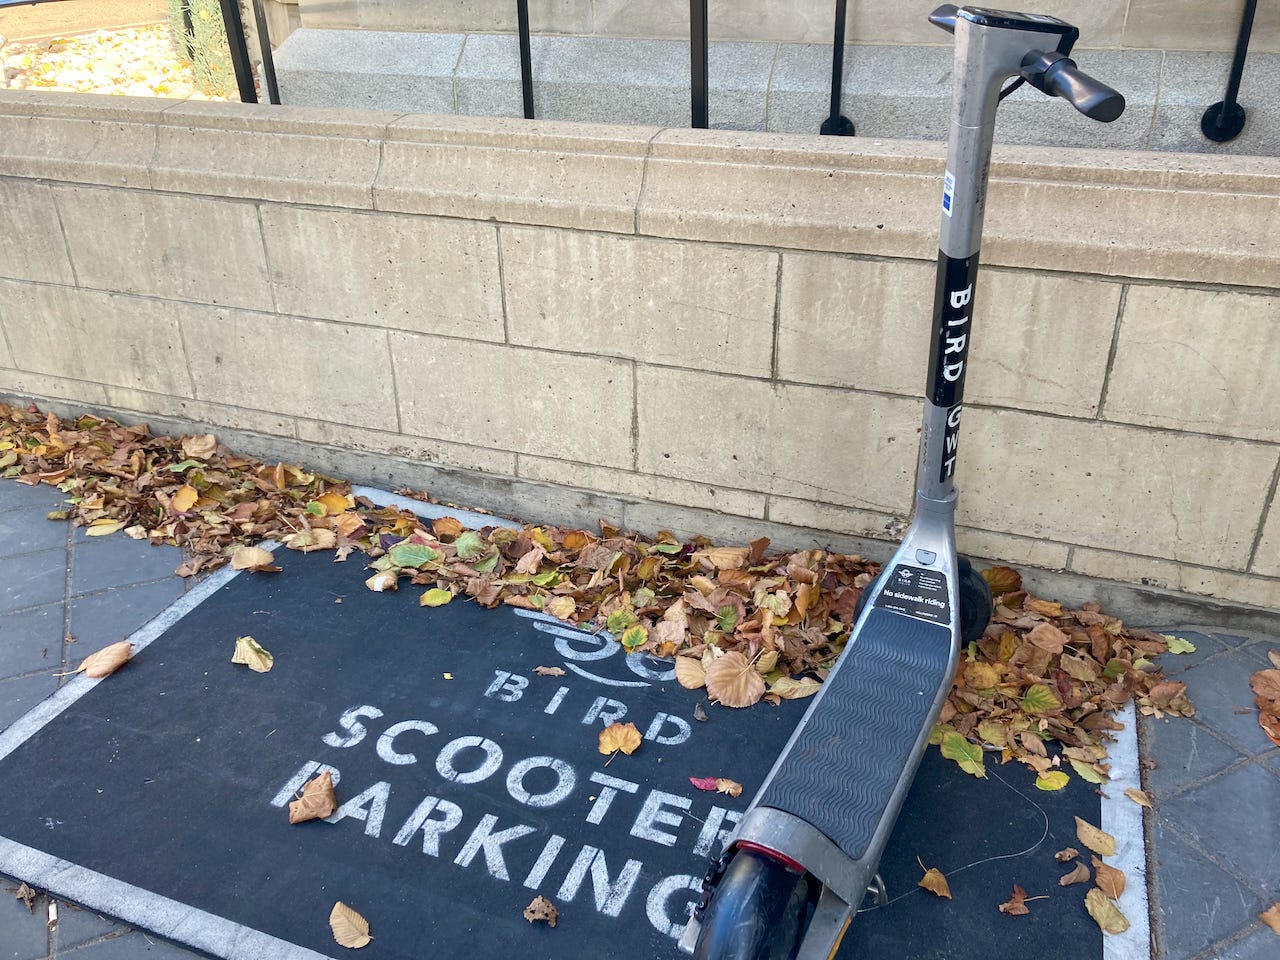 A Bird scooter in Edmonton, Canada.